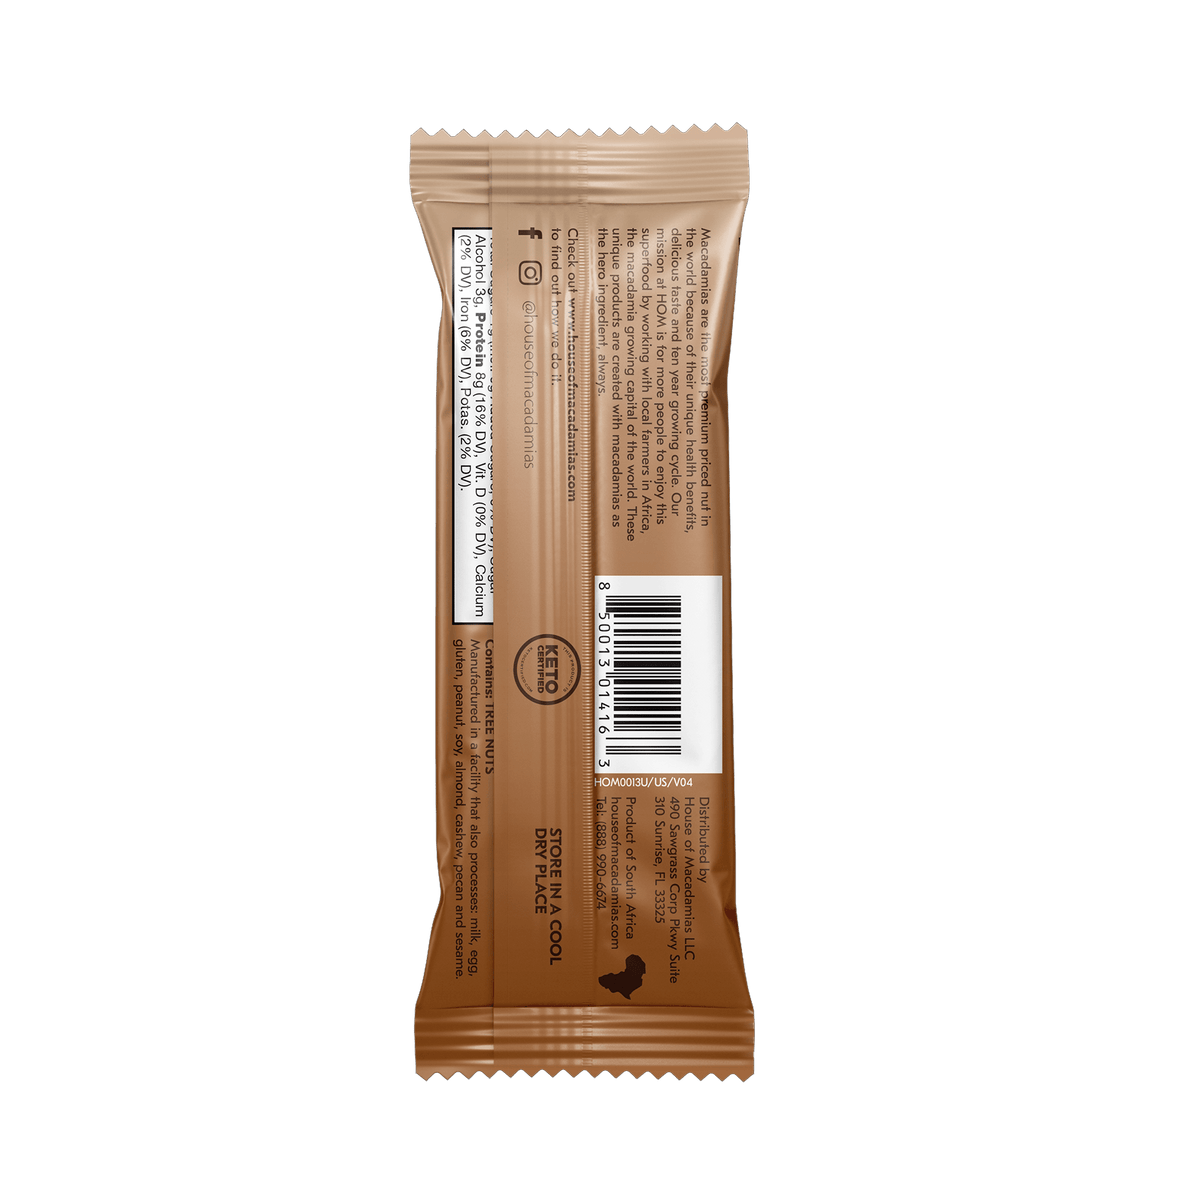 Dark Chocolate Caramel Cashew Nutrition Bars 12 Count